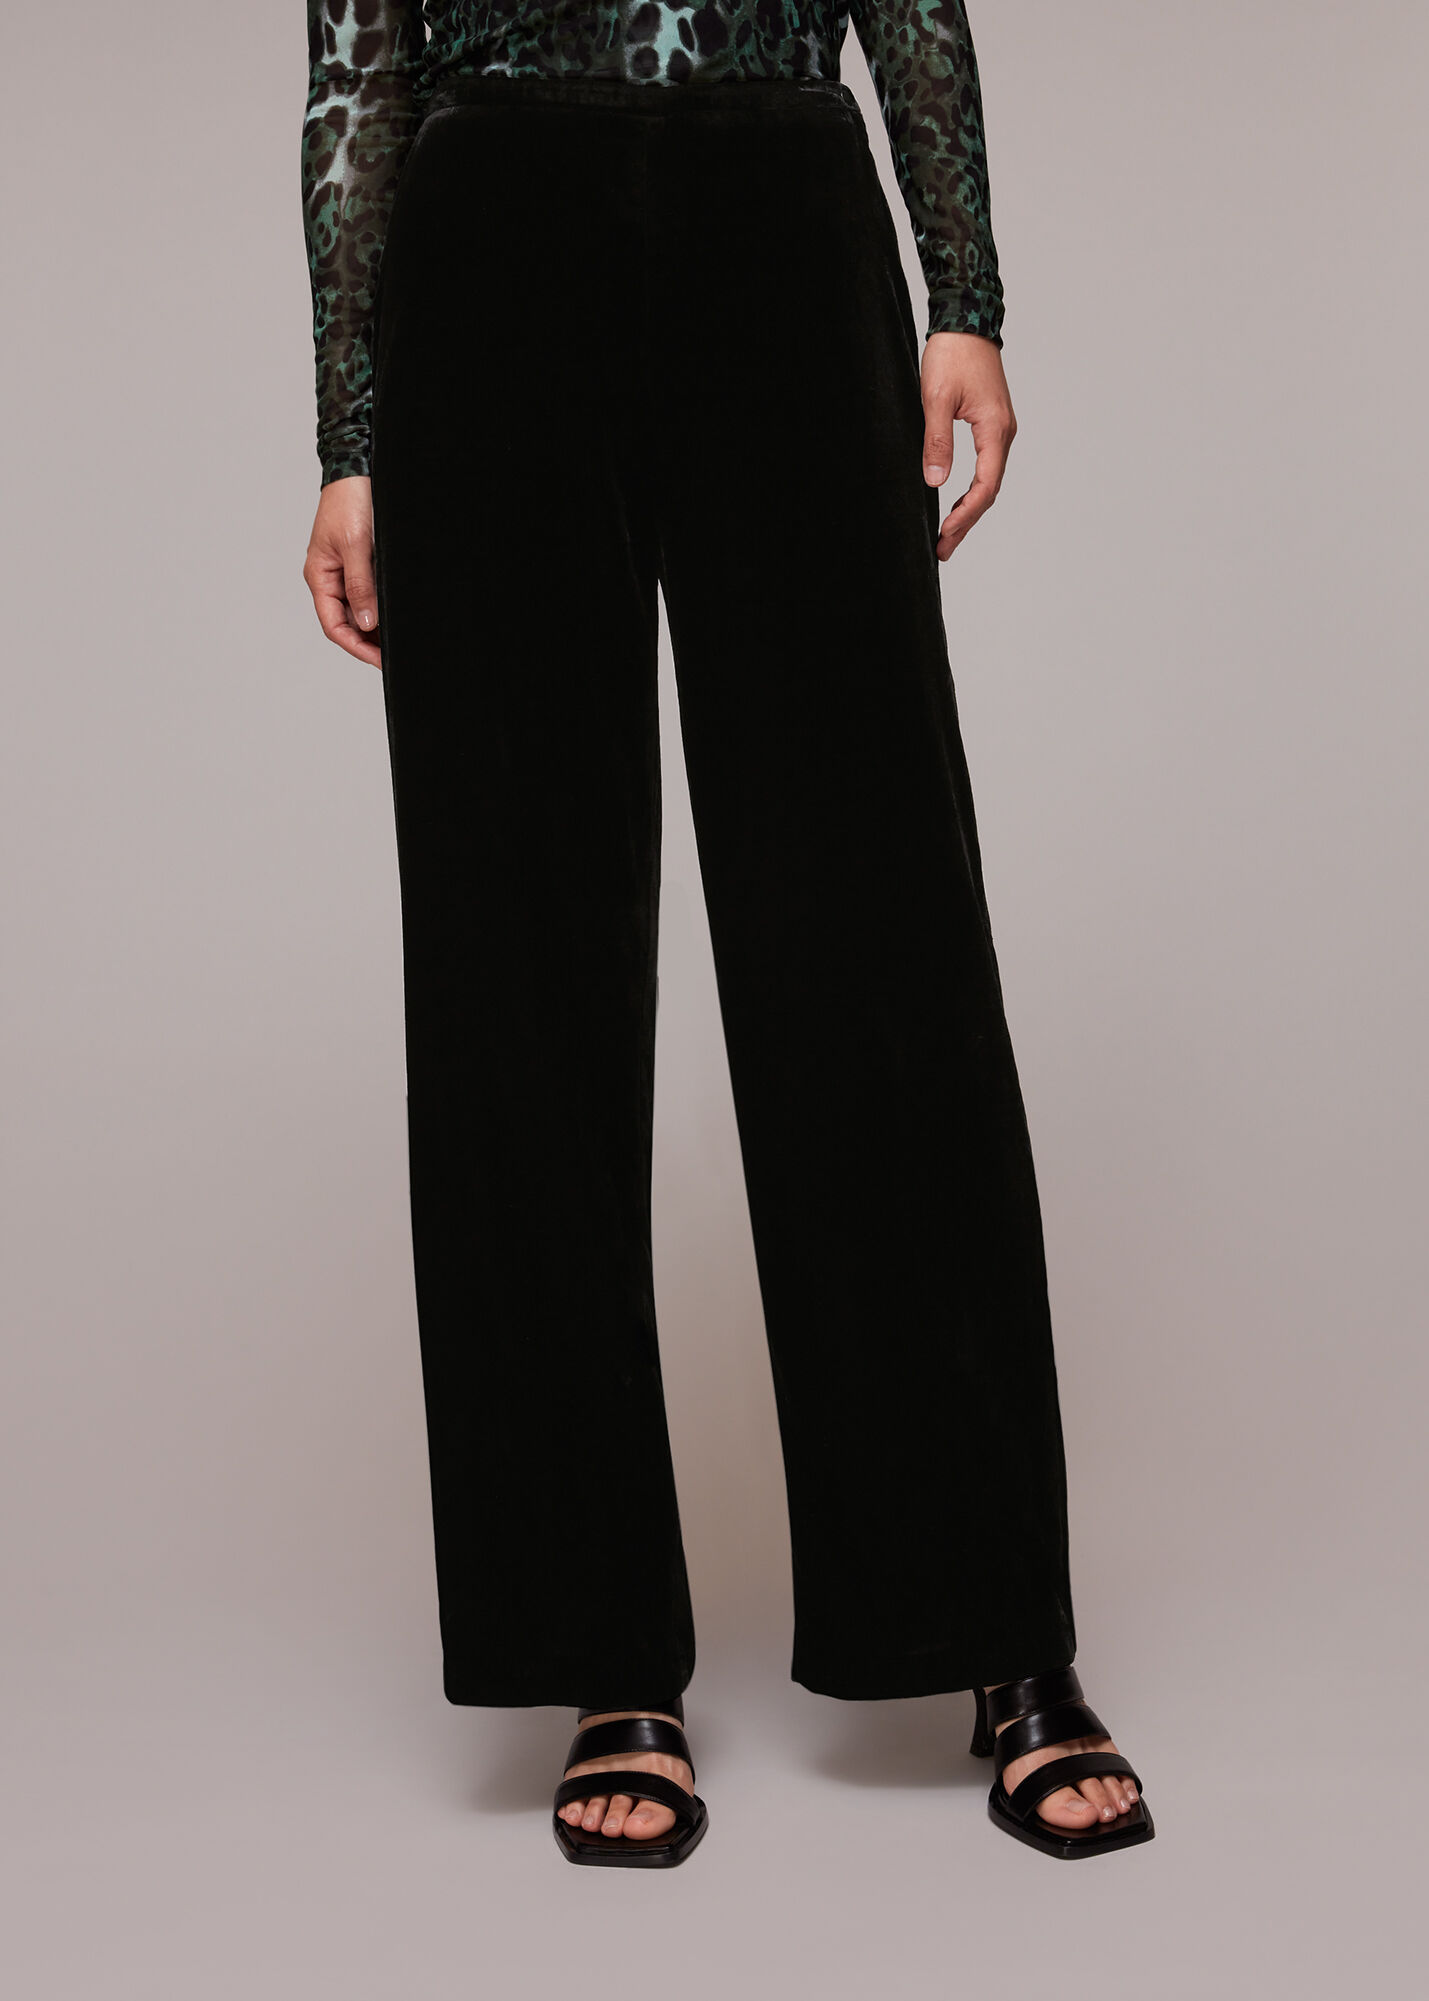 Elin Kling  chic black velvet trousers  Vestidos sport elegante Vestidos  de terciopelo Moda